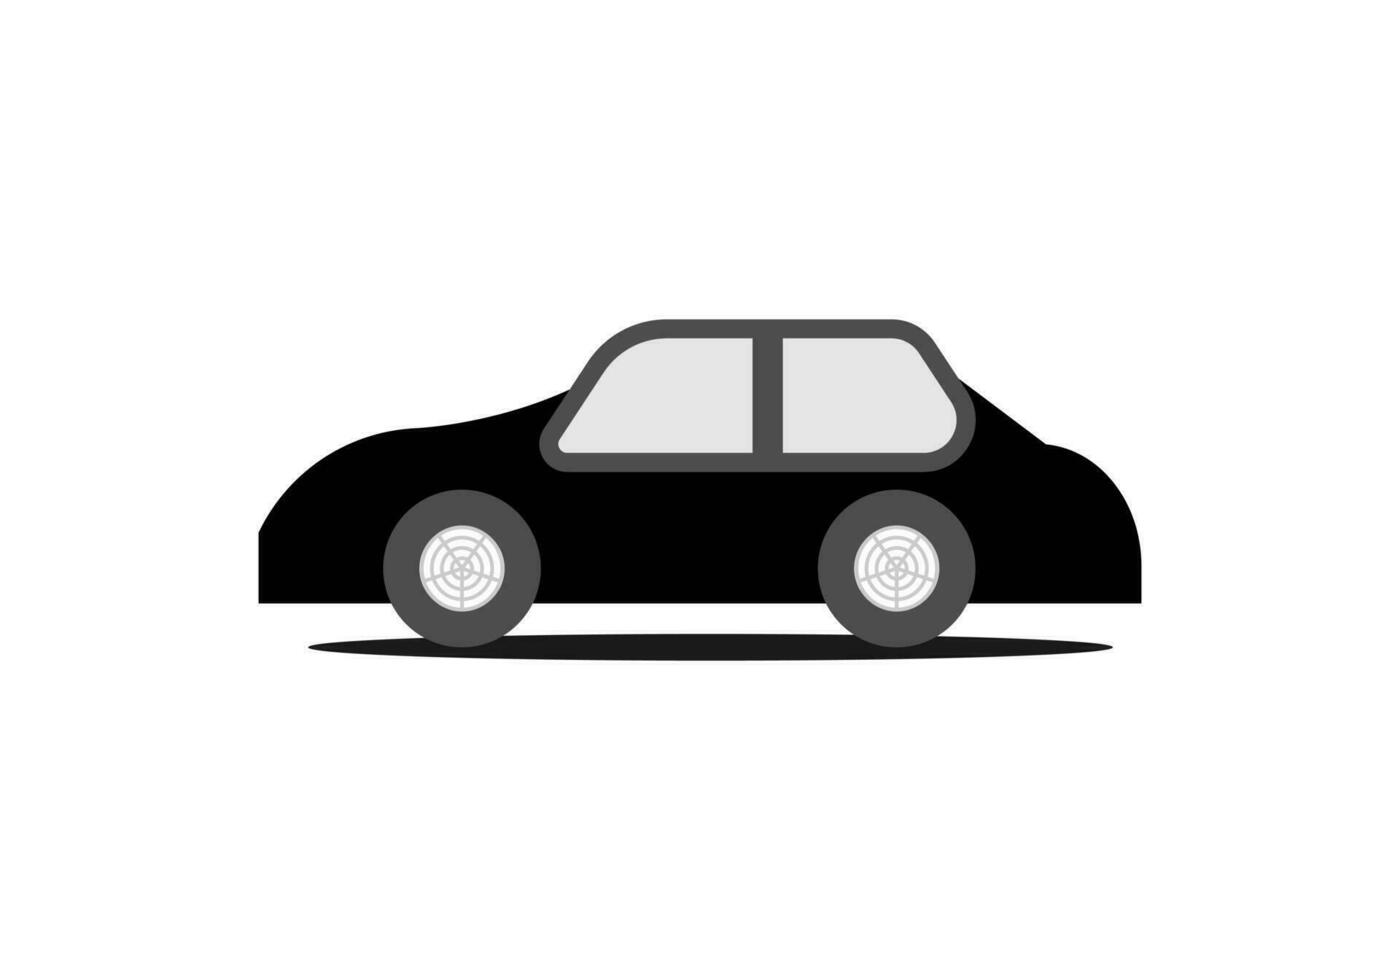 Car service doodle icons, auto repair vector signs